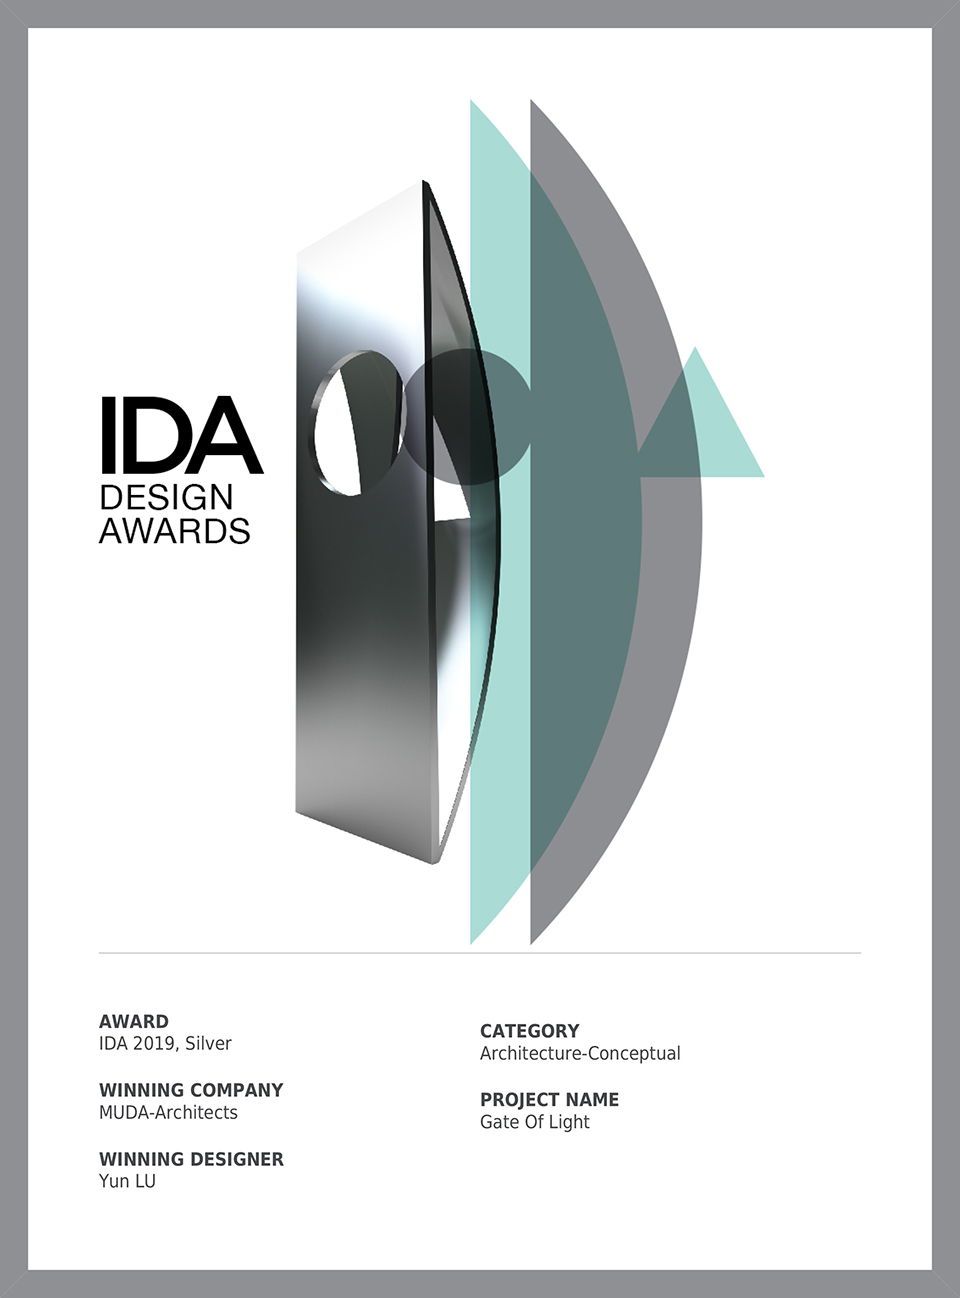 MUDA won the 2019 International Design Awards